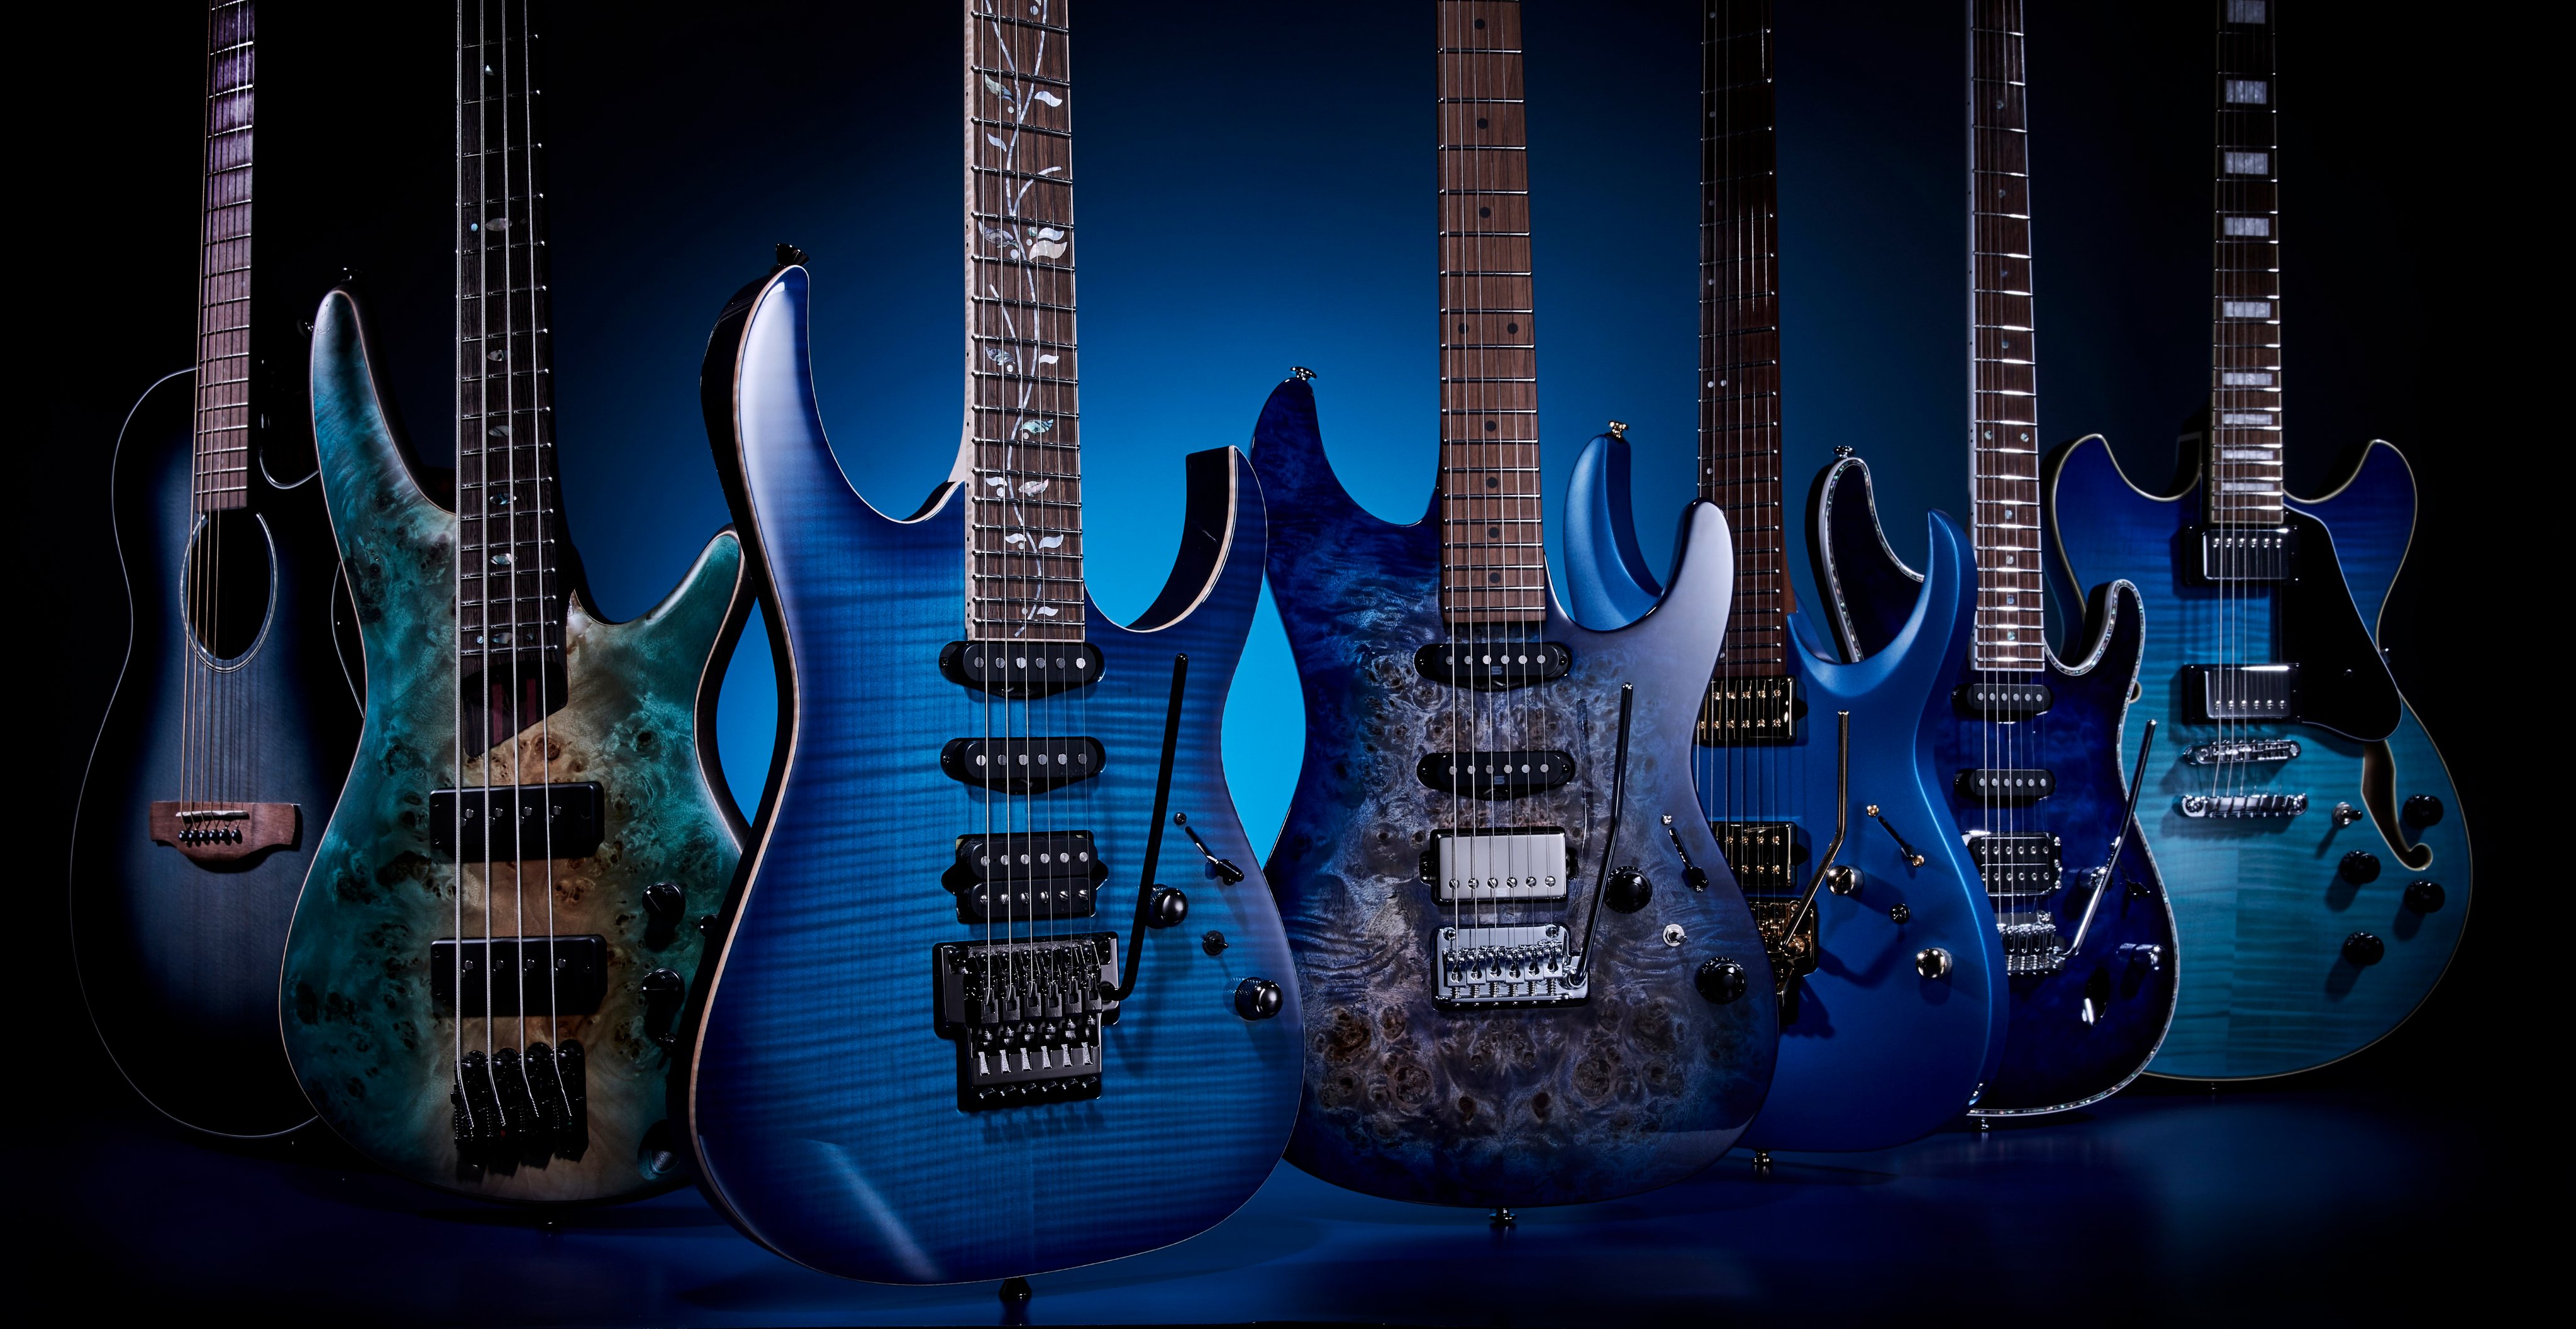 Ibanezjapan Ibanezの 青いギター をご紹介 Az2402 Icm Az24 Icm Icm Ice Blue Metallic 新世代ギタリストのスタンダード モデル Az シリーズより Az2402 Icm Az24 Icm T Co Ggmvidceb8 僕の青いギターかっこいい